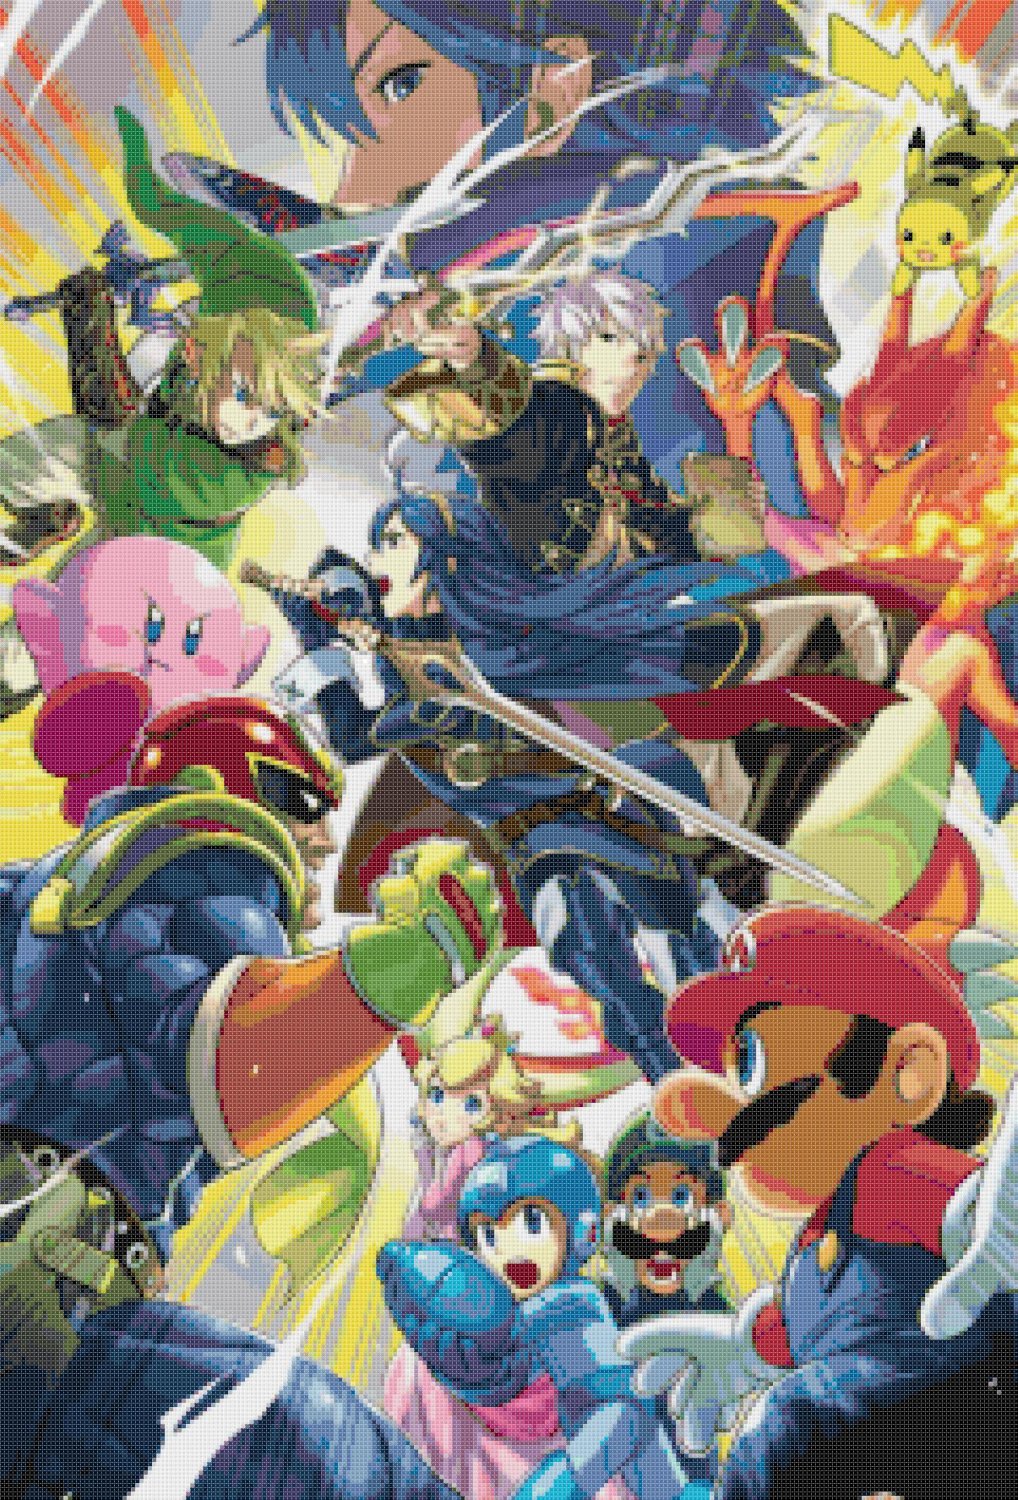 Super Smash Bros Lucina and Robin - 17.21" x 25.36" - Cross Stitch Pattern Pdf E857